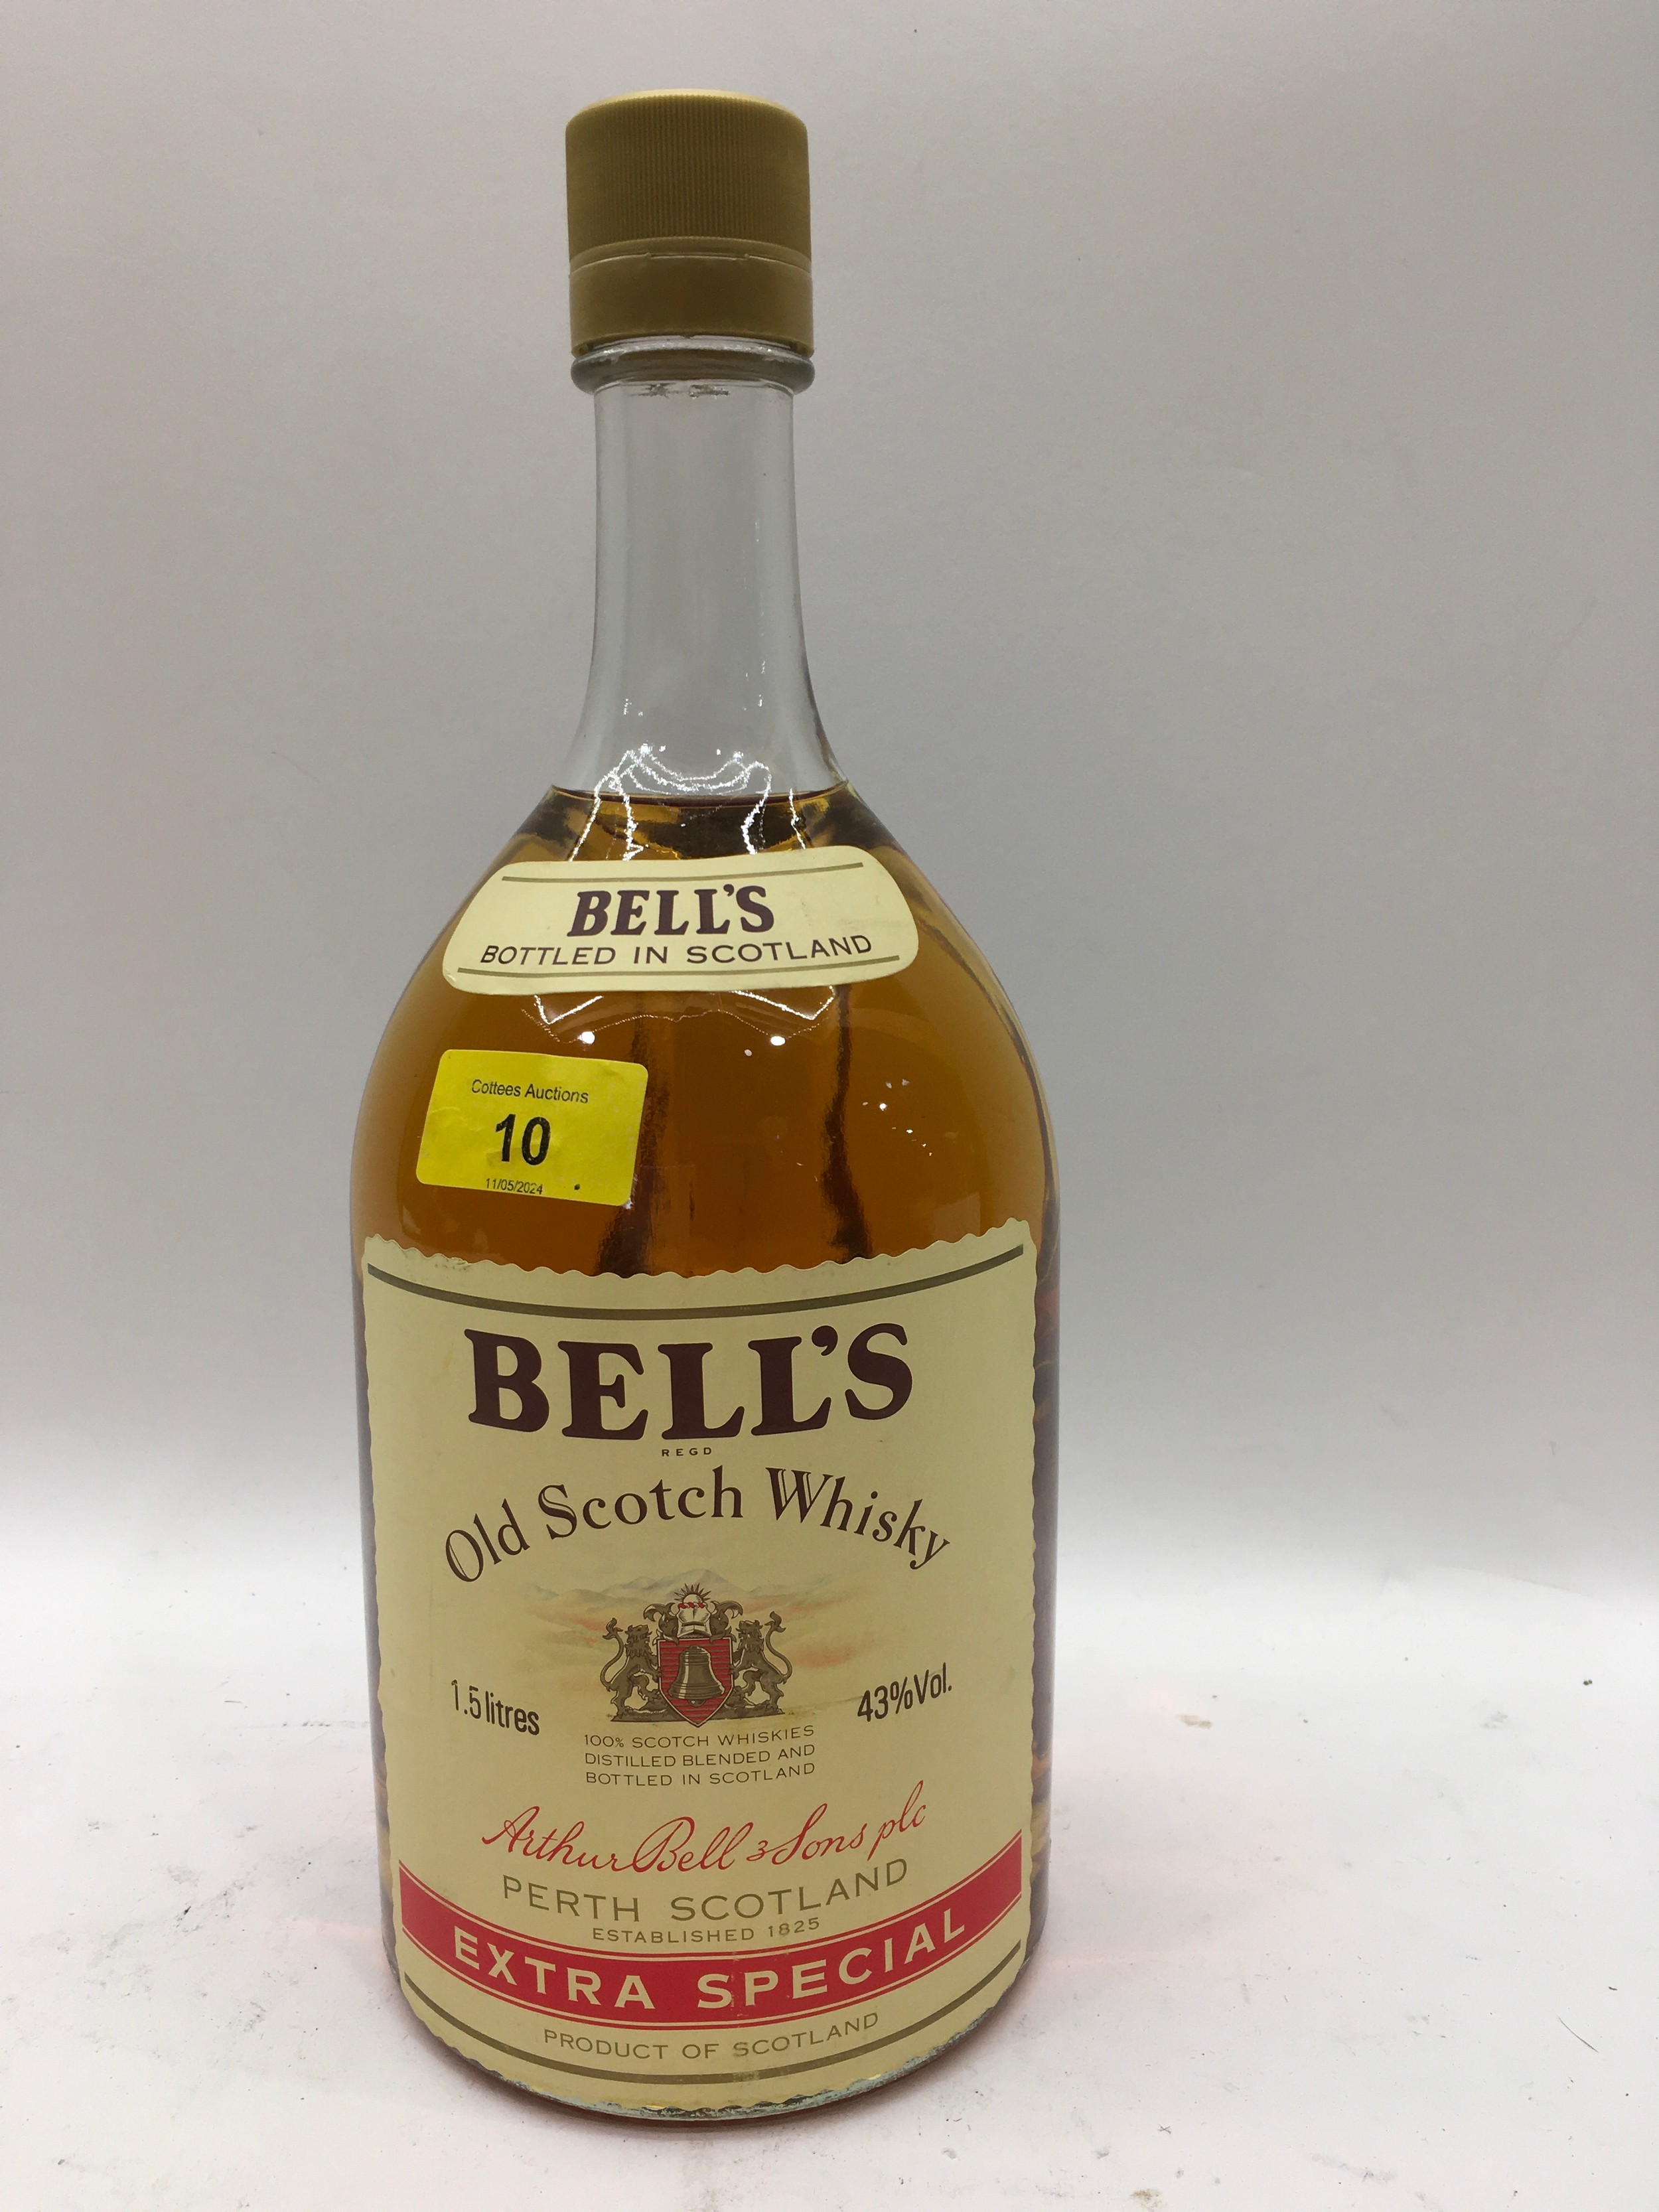 1.5ltr bottle of "Bells" whisky